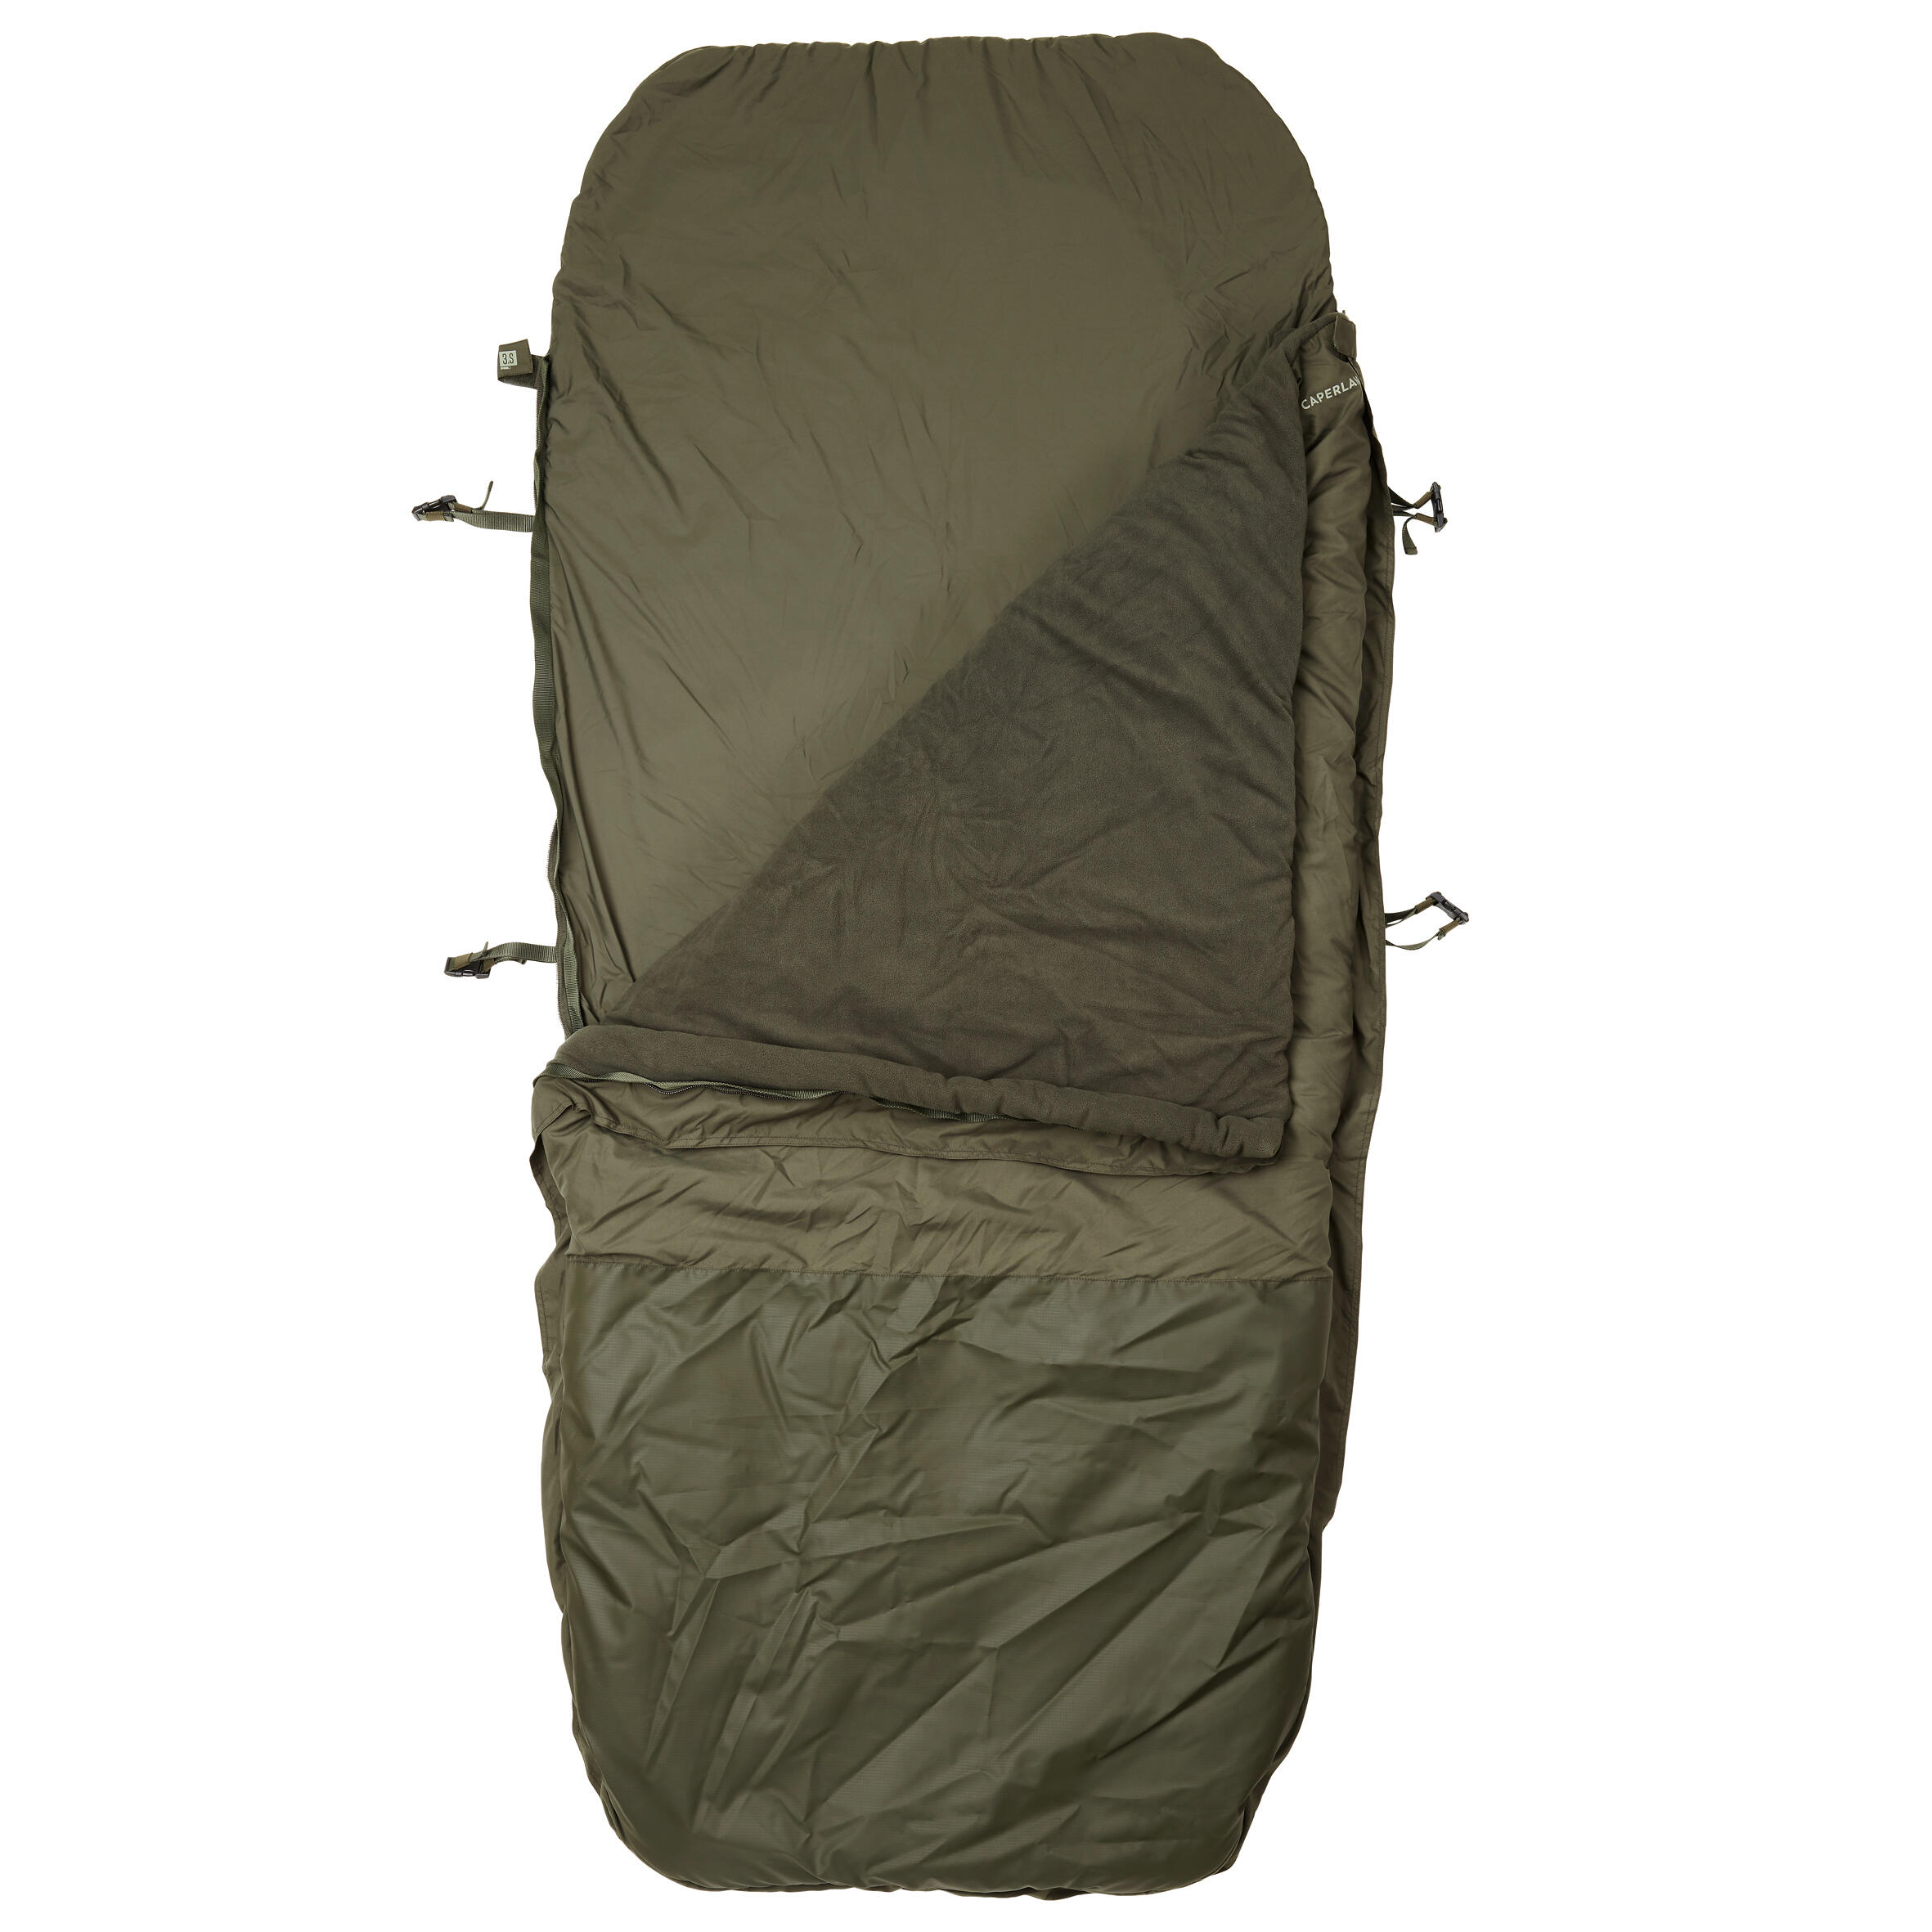 3-season sleeping bag for carp fishing 1/8